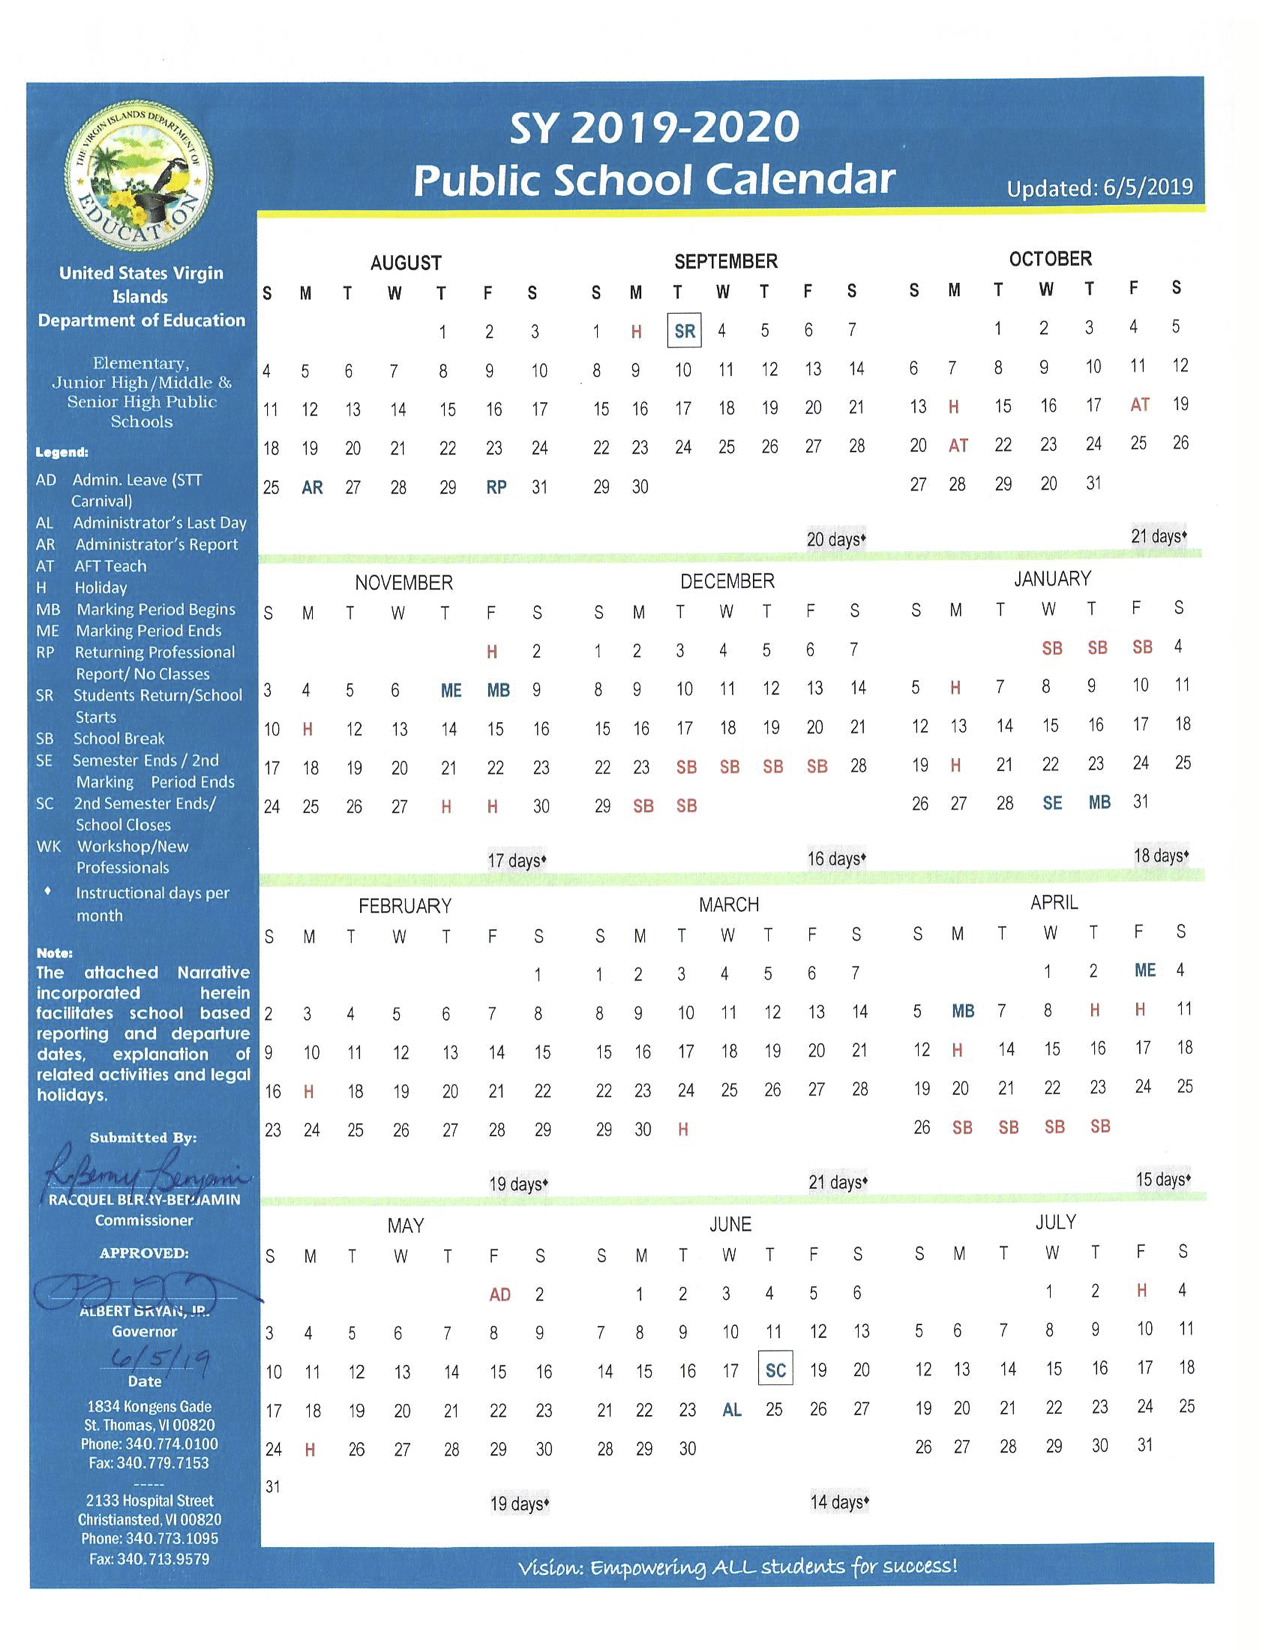 19-20 School Calendar_Updated 06052019.jpg